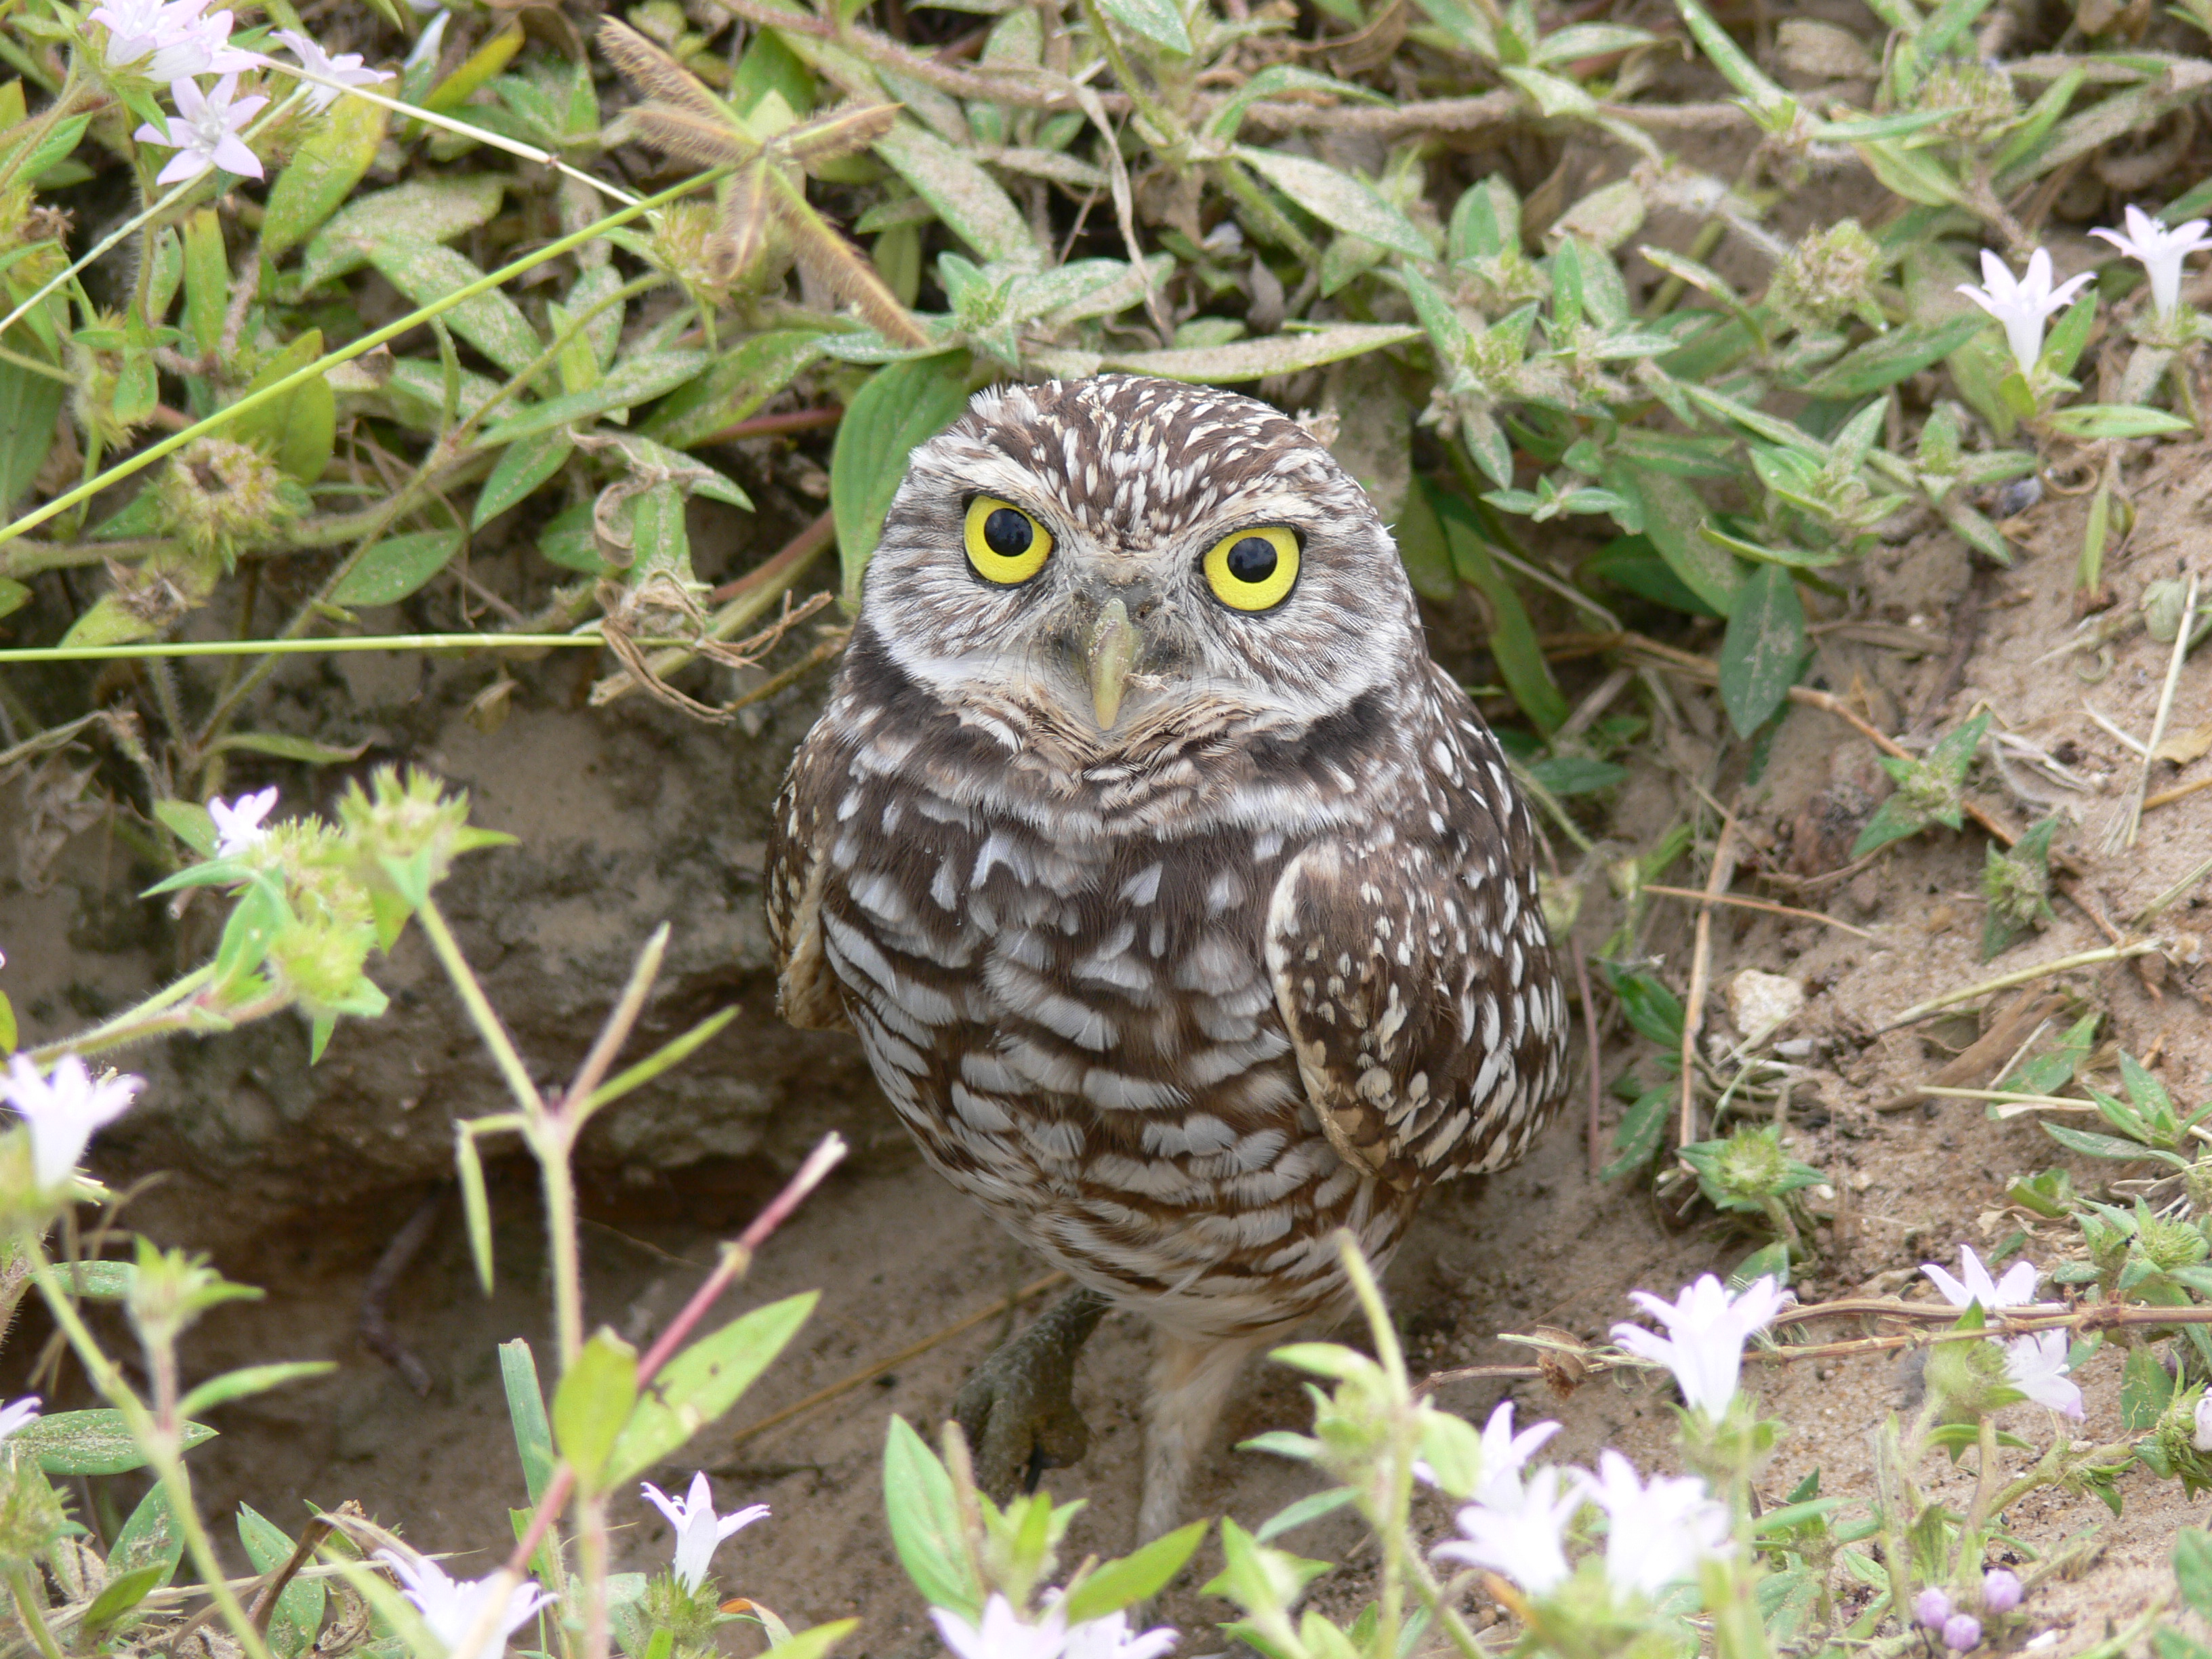 A Burrowing Owl